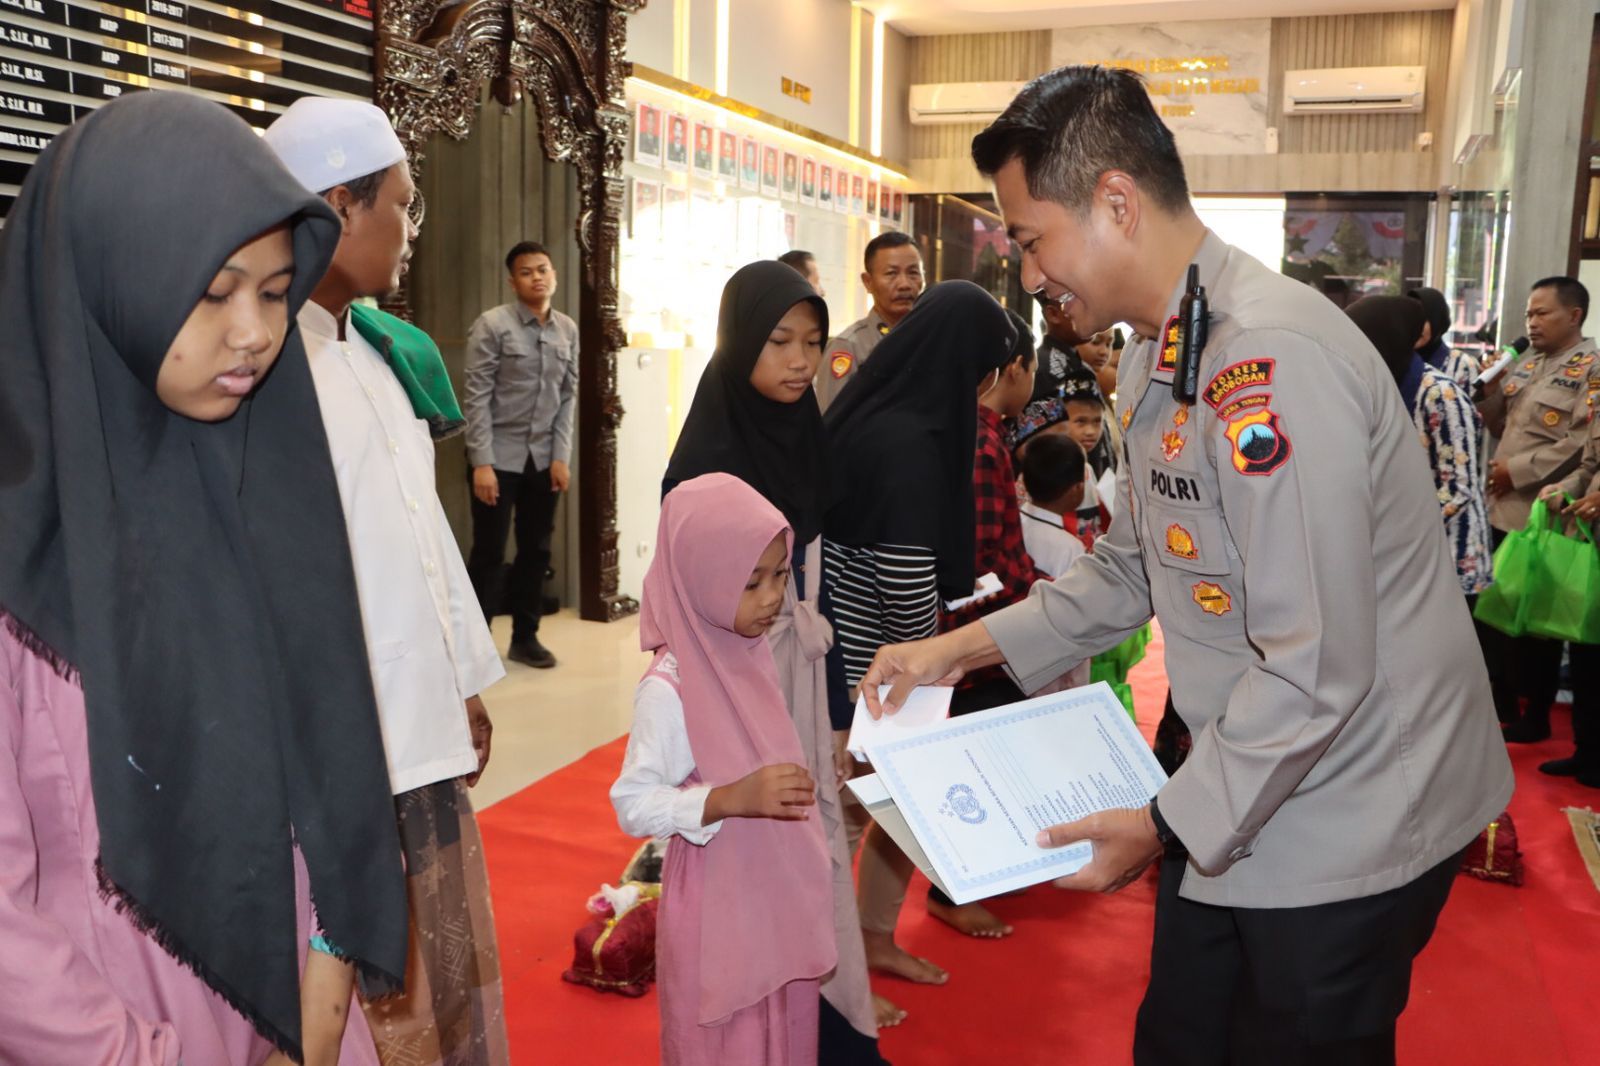 Kapolres Grobogan AKBP Dedy Anung Kurniawan memberikan santunan kepada anak yatim piatu sebagai bagian dari titipan harta dari ALLAH SWT.